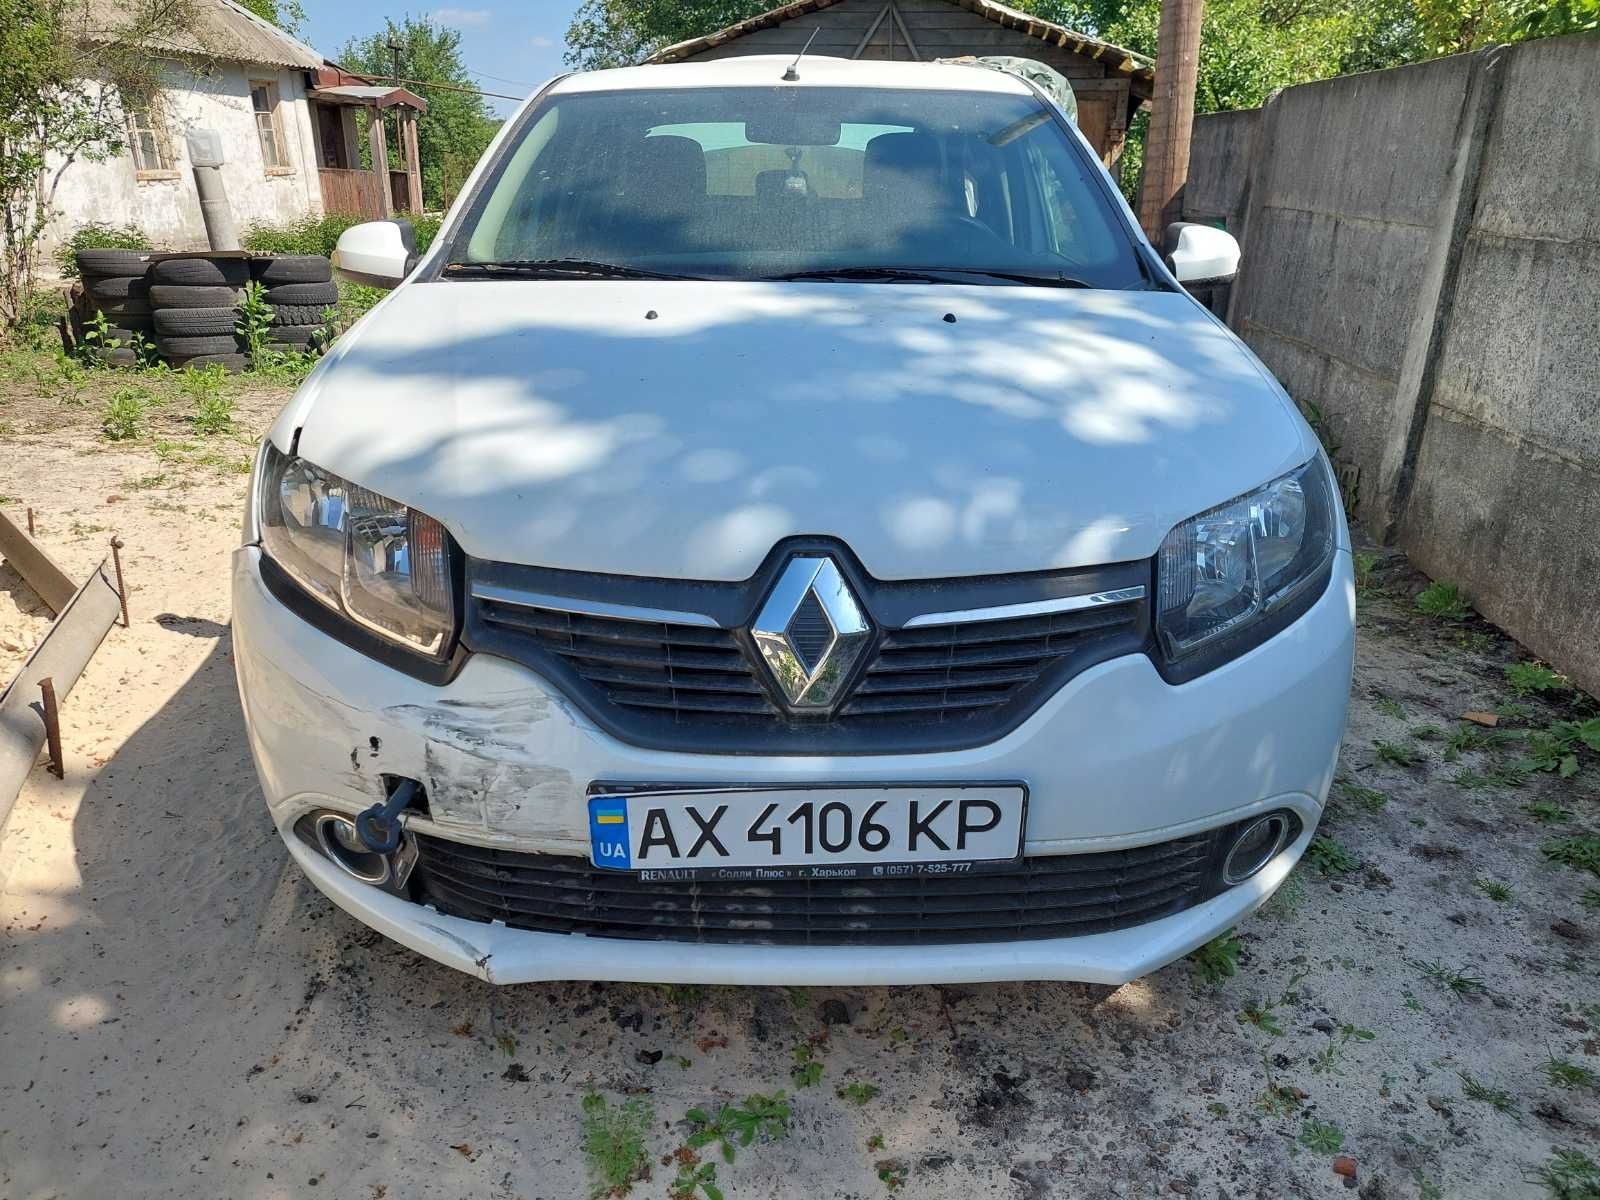 Продам Renault Logan ll, 2014 г.